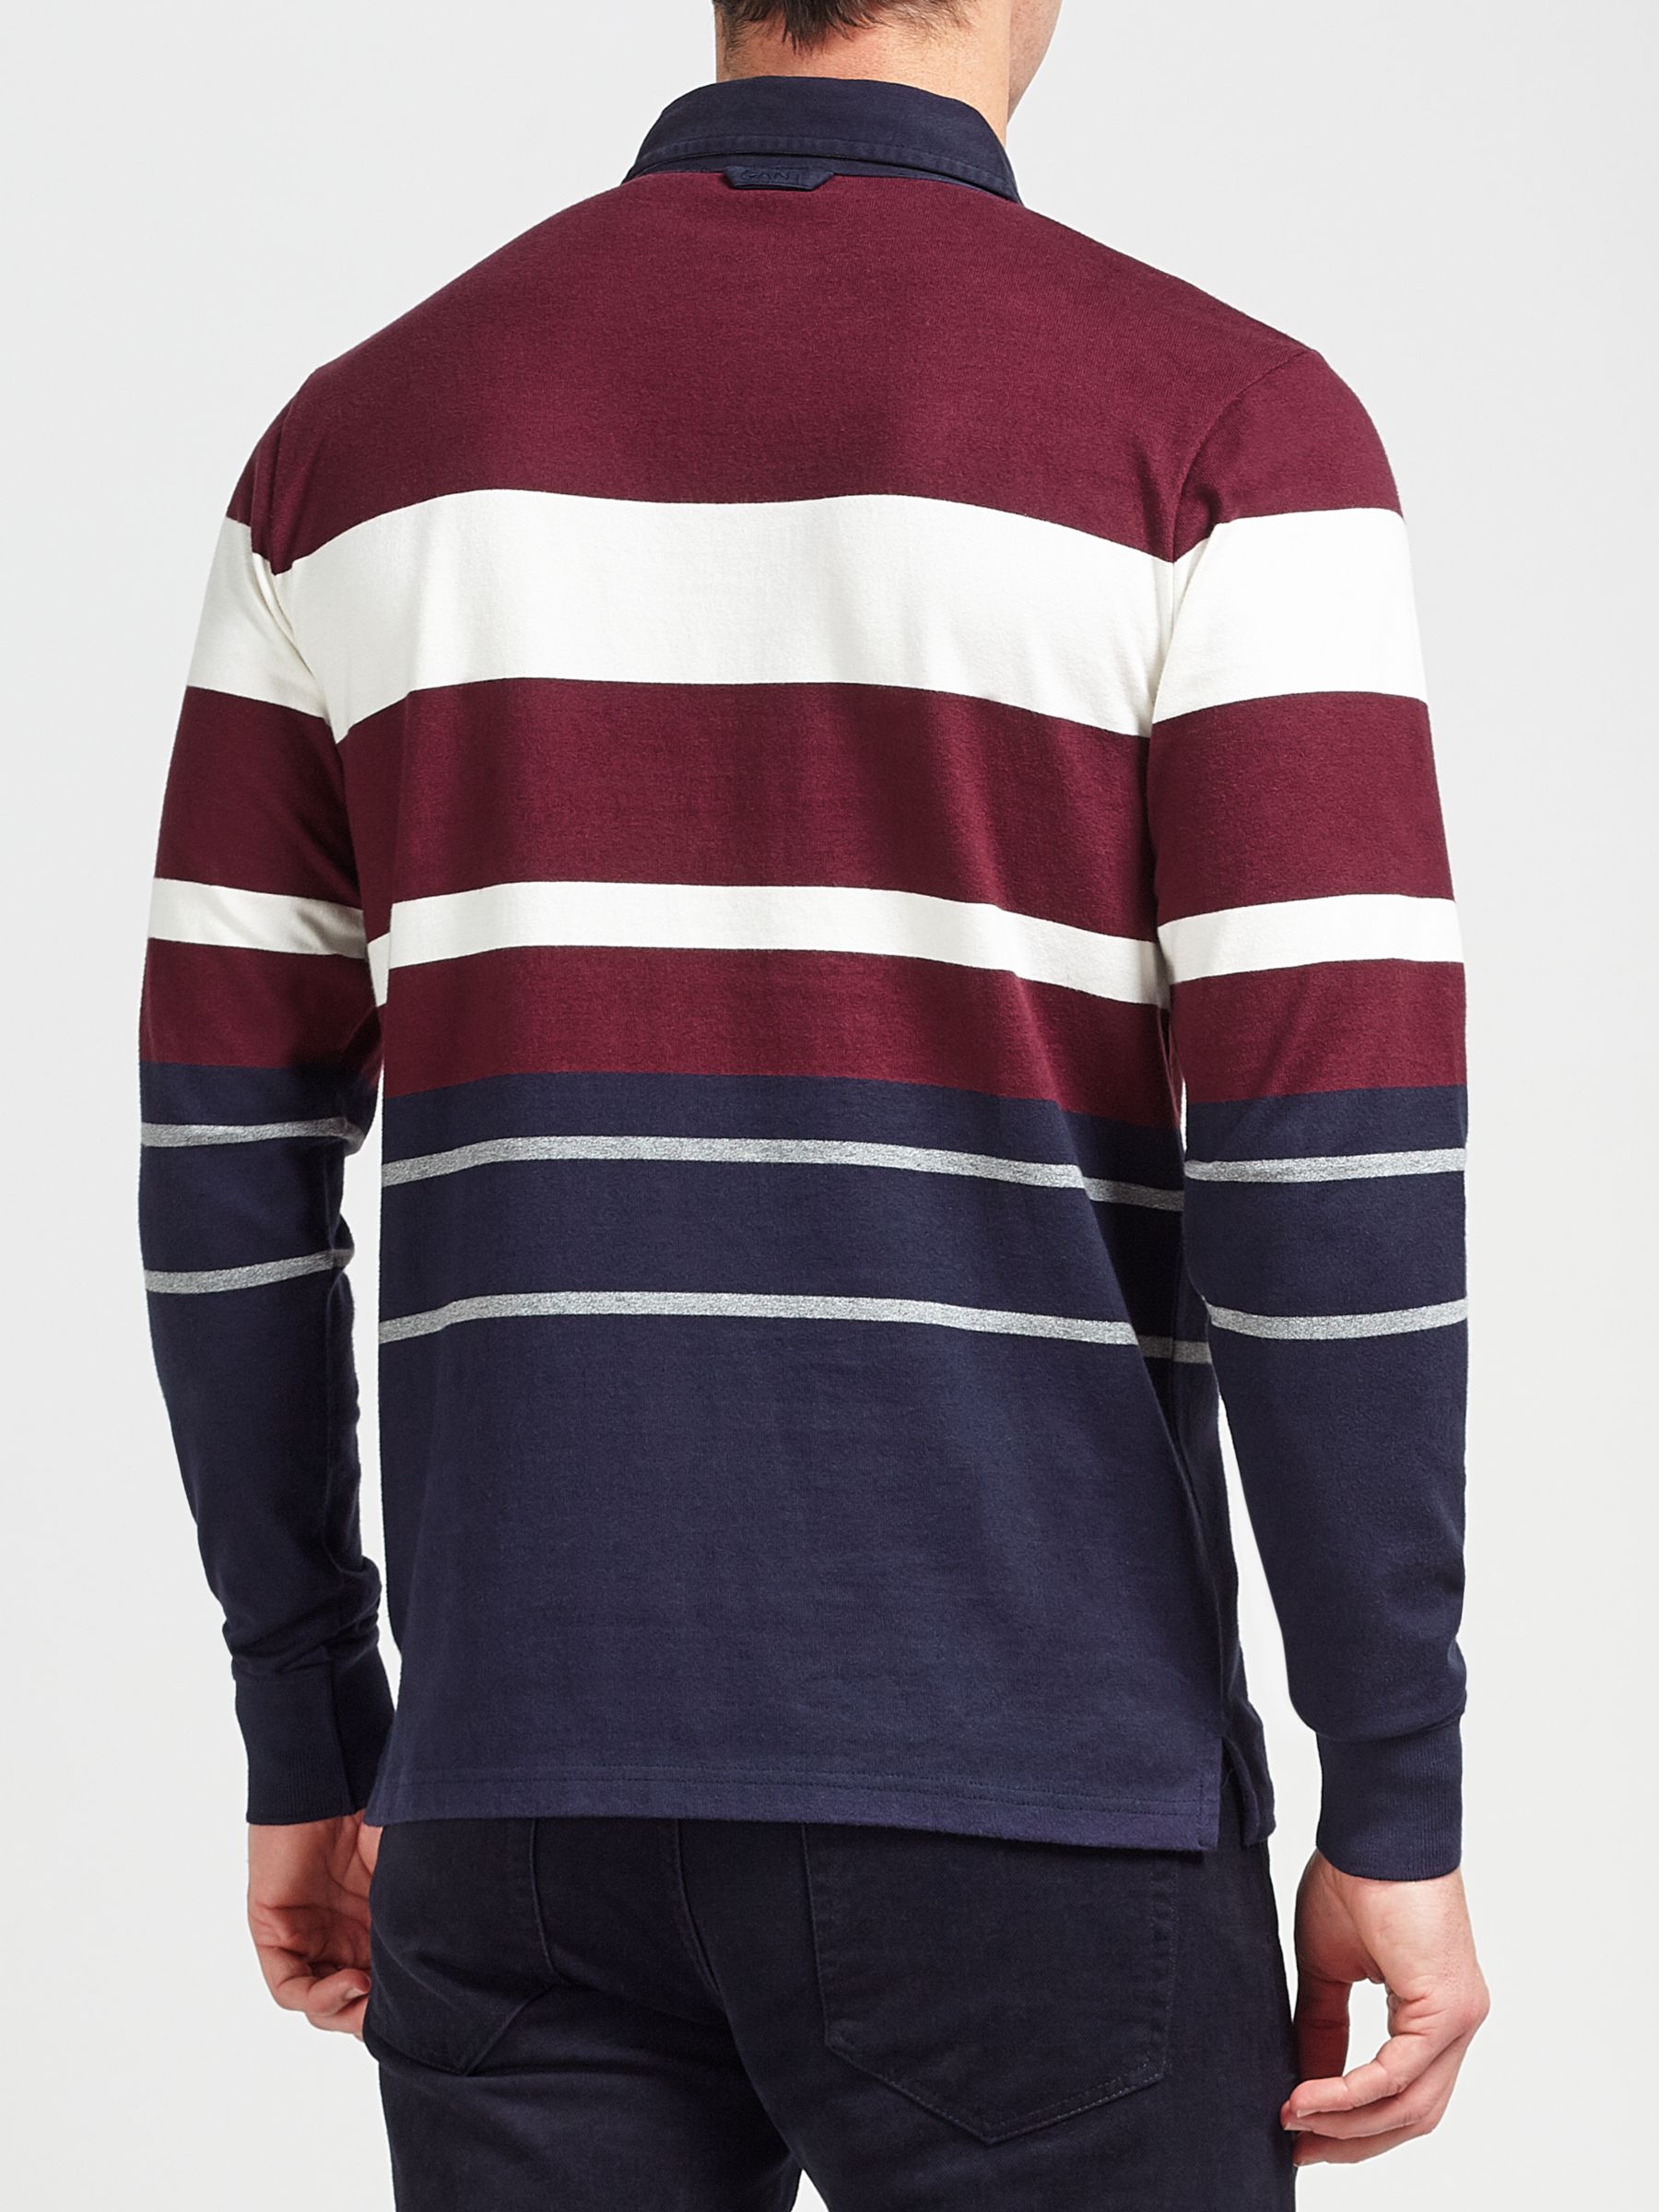 Gant Long Sleeve Multi Stripe Rugby Shirt, Purple/Wine at John Lewis ...